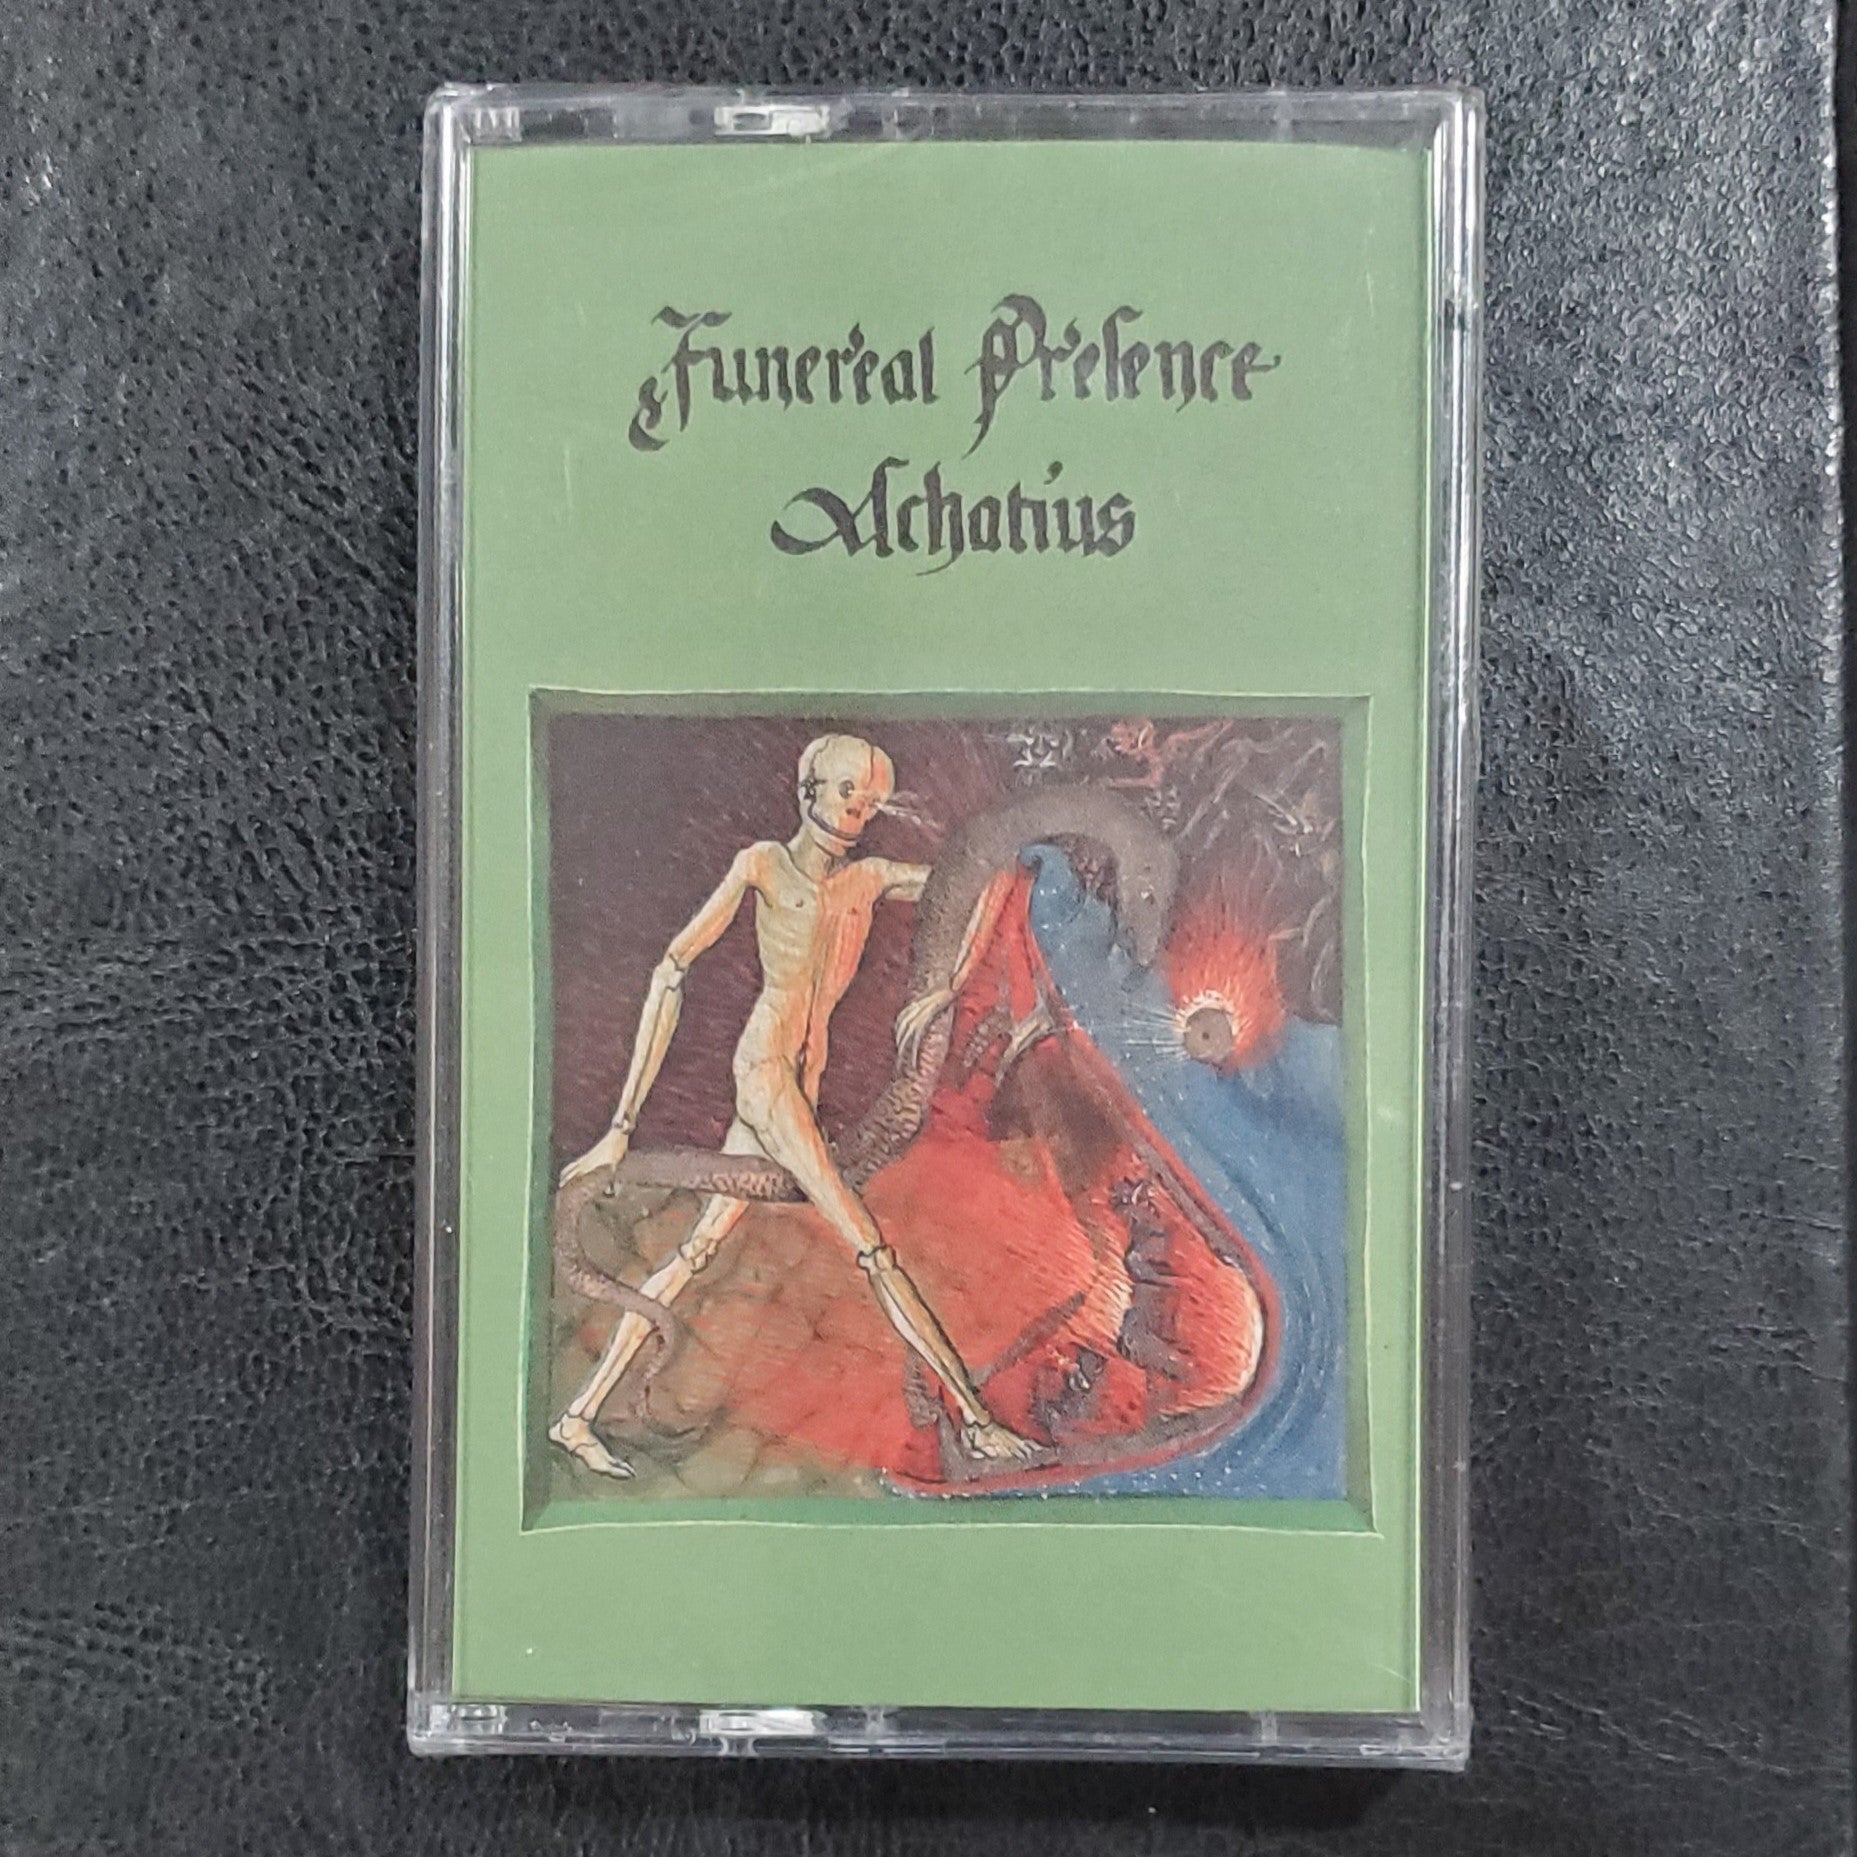 Funereal Presence – Achatius Tape